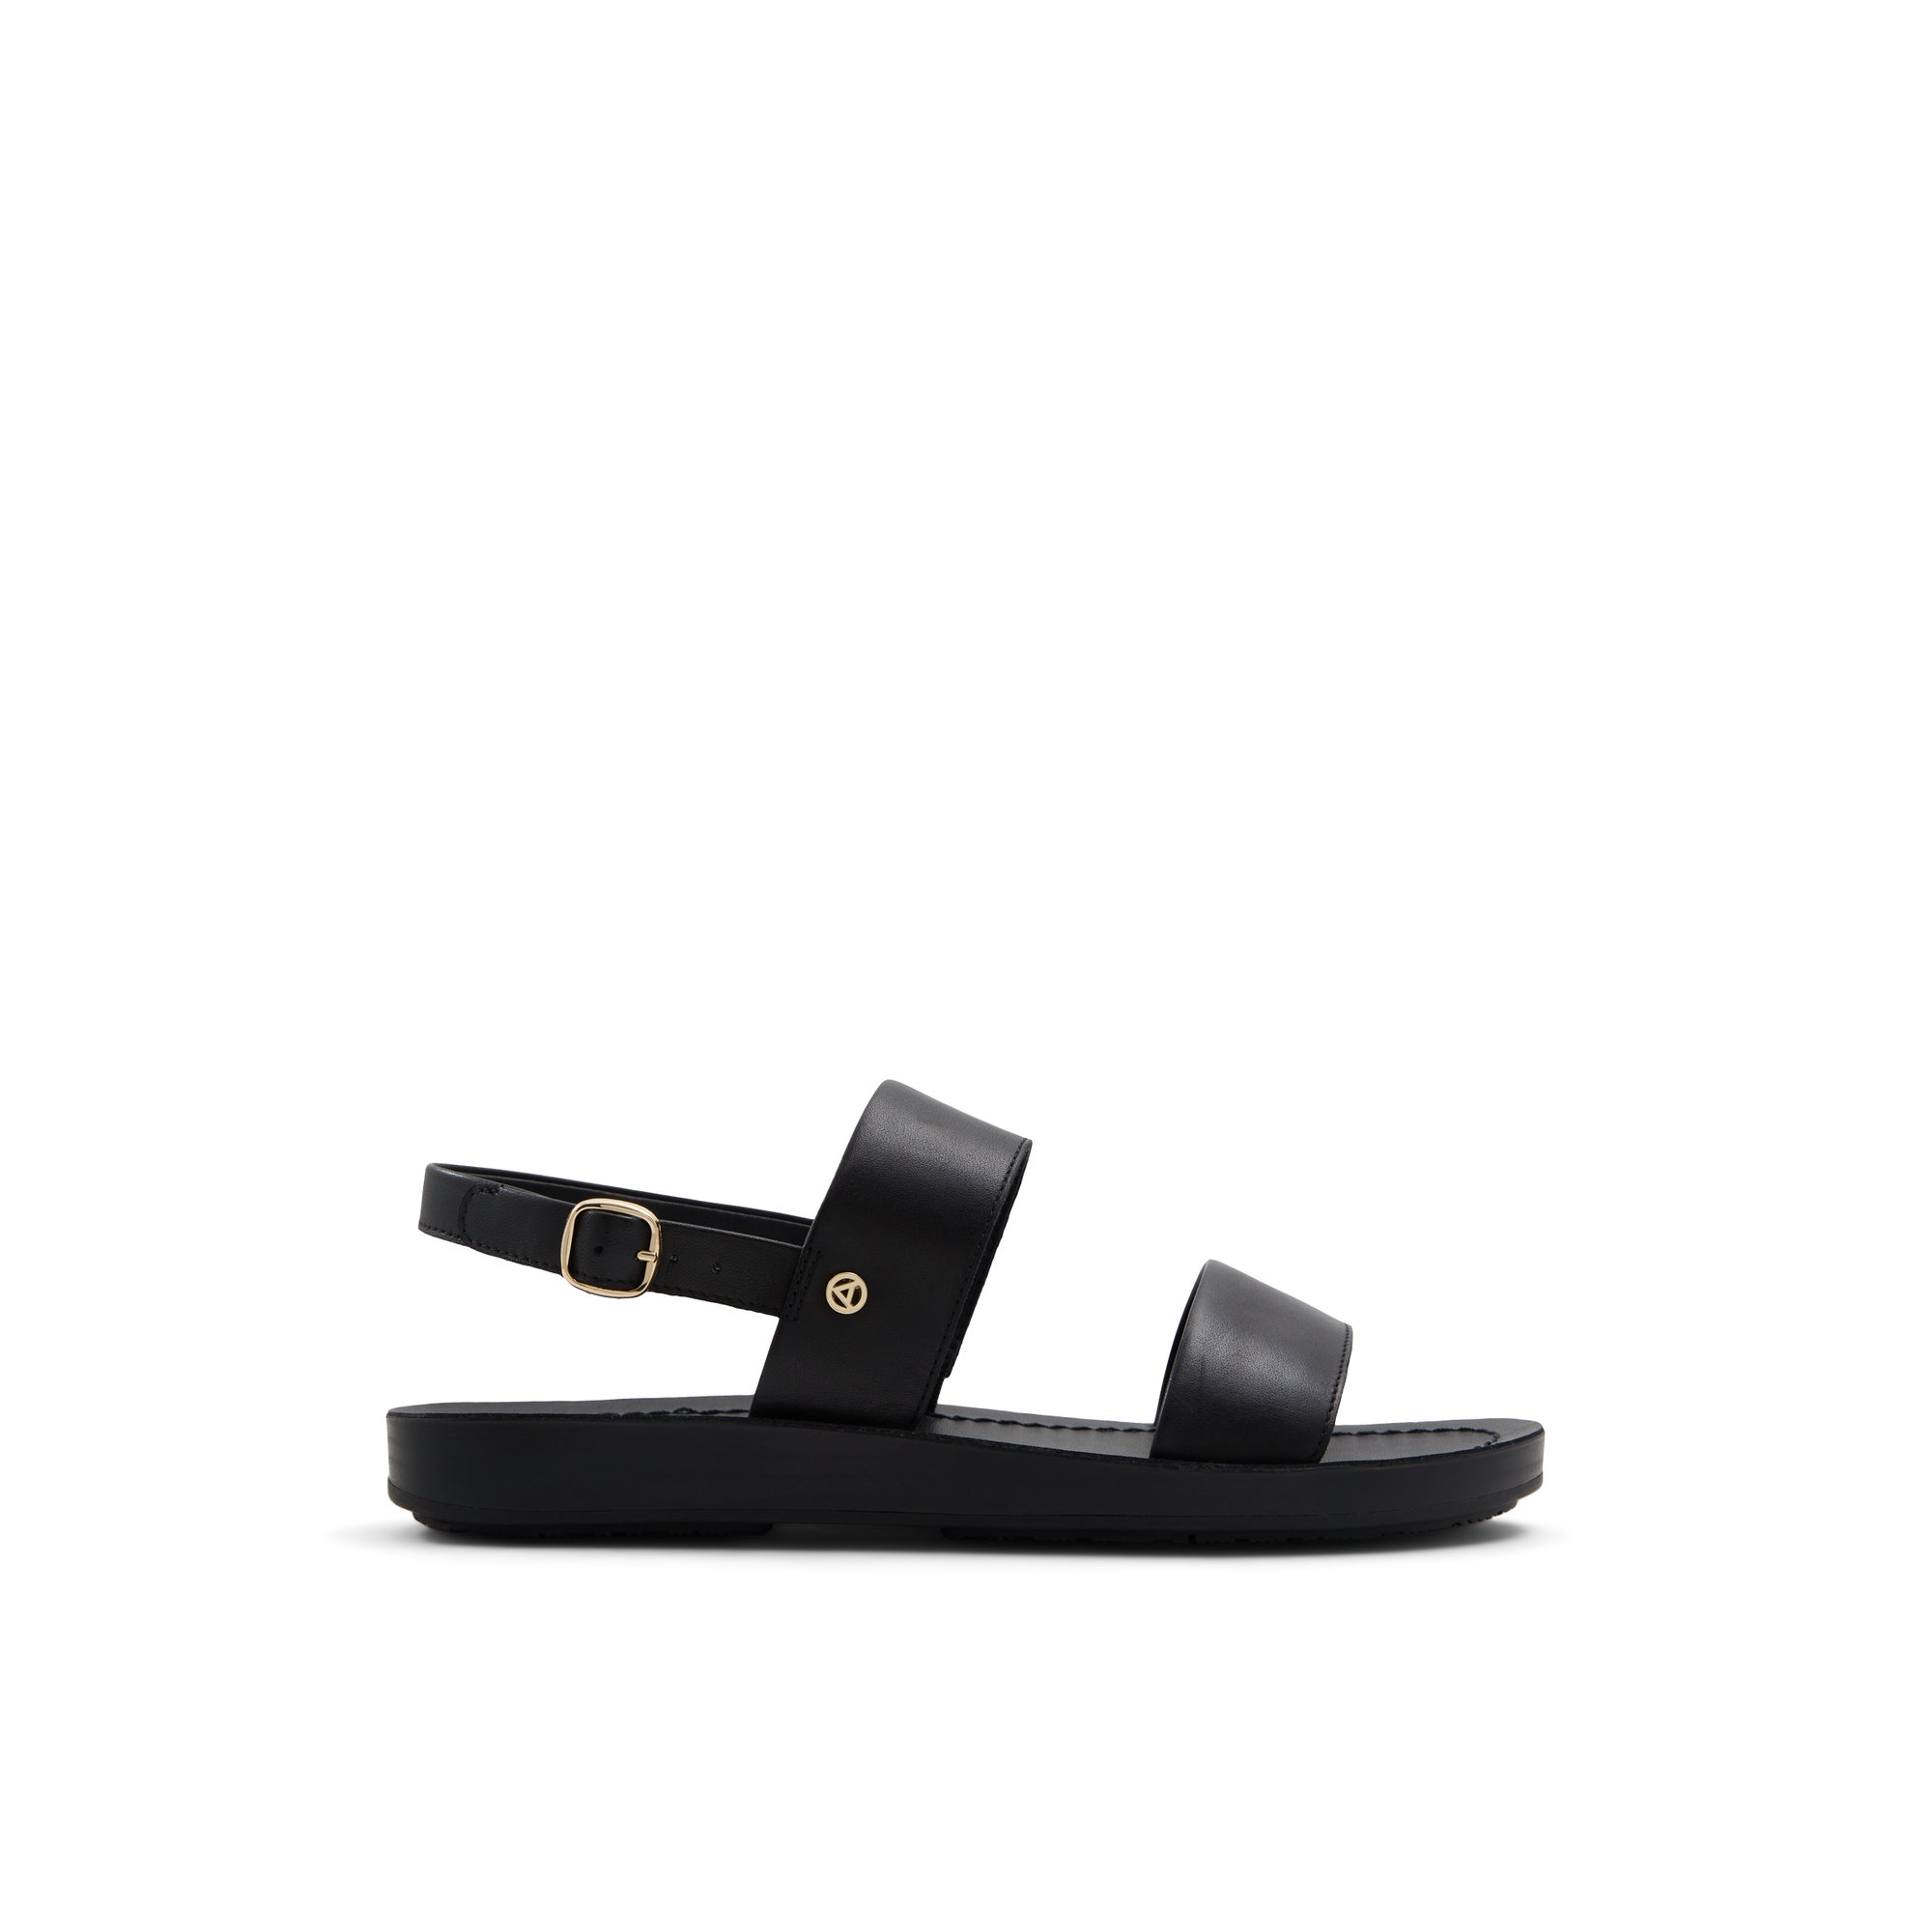 ALDO Bamaever - Women's Sandals Flats - Black